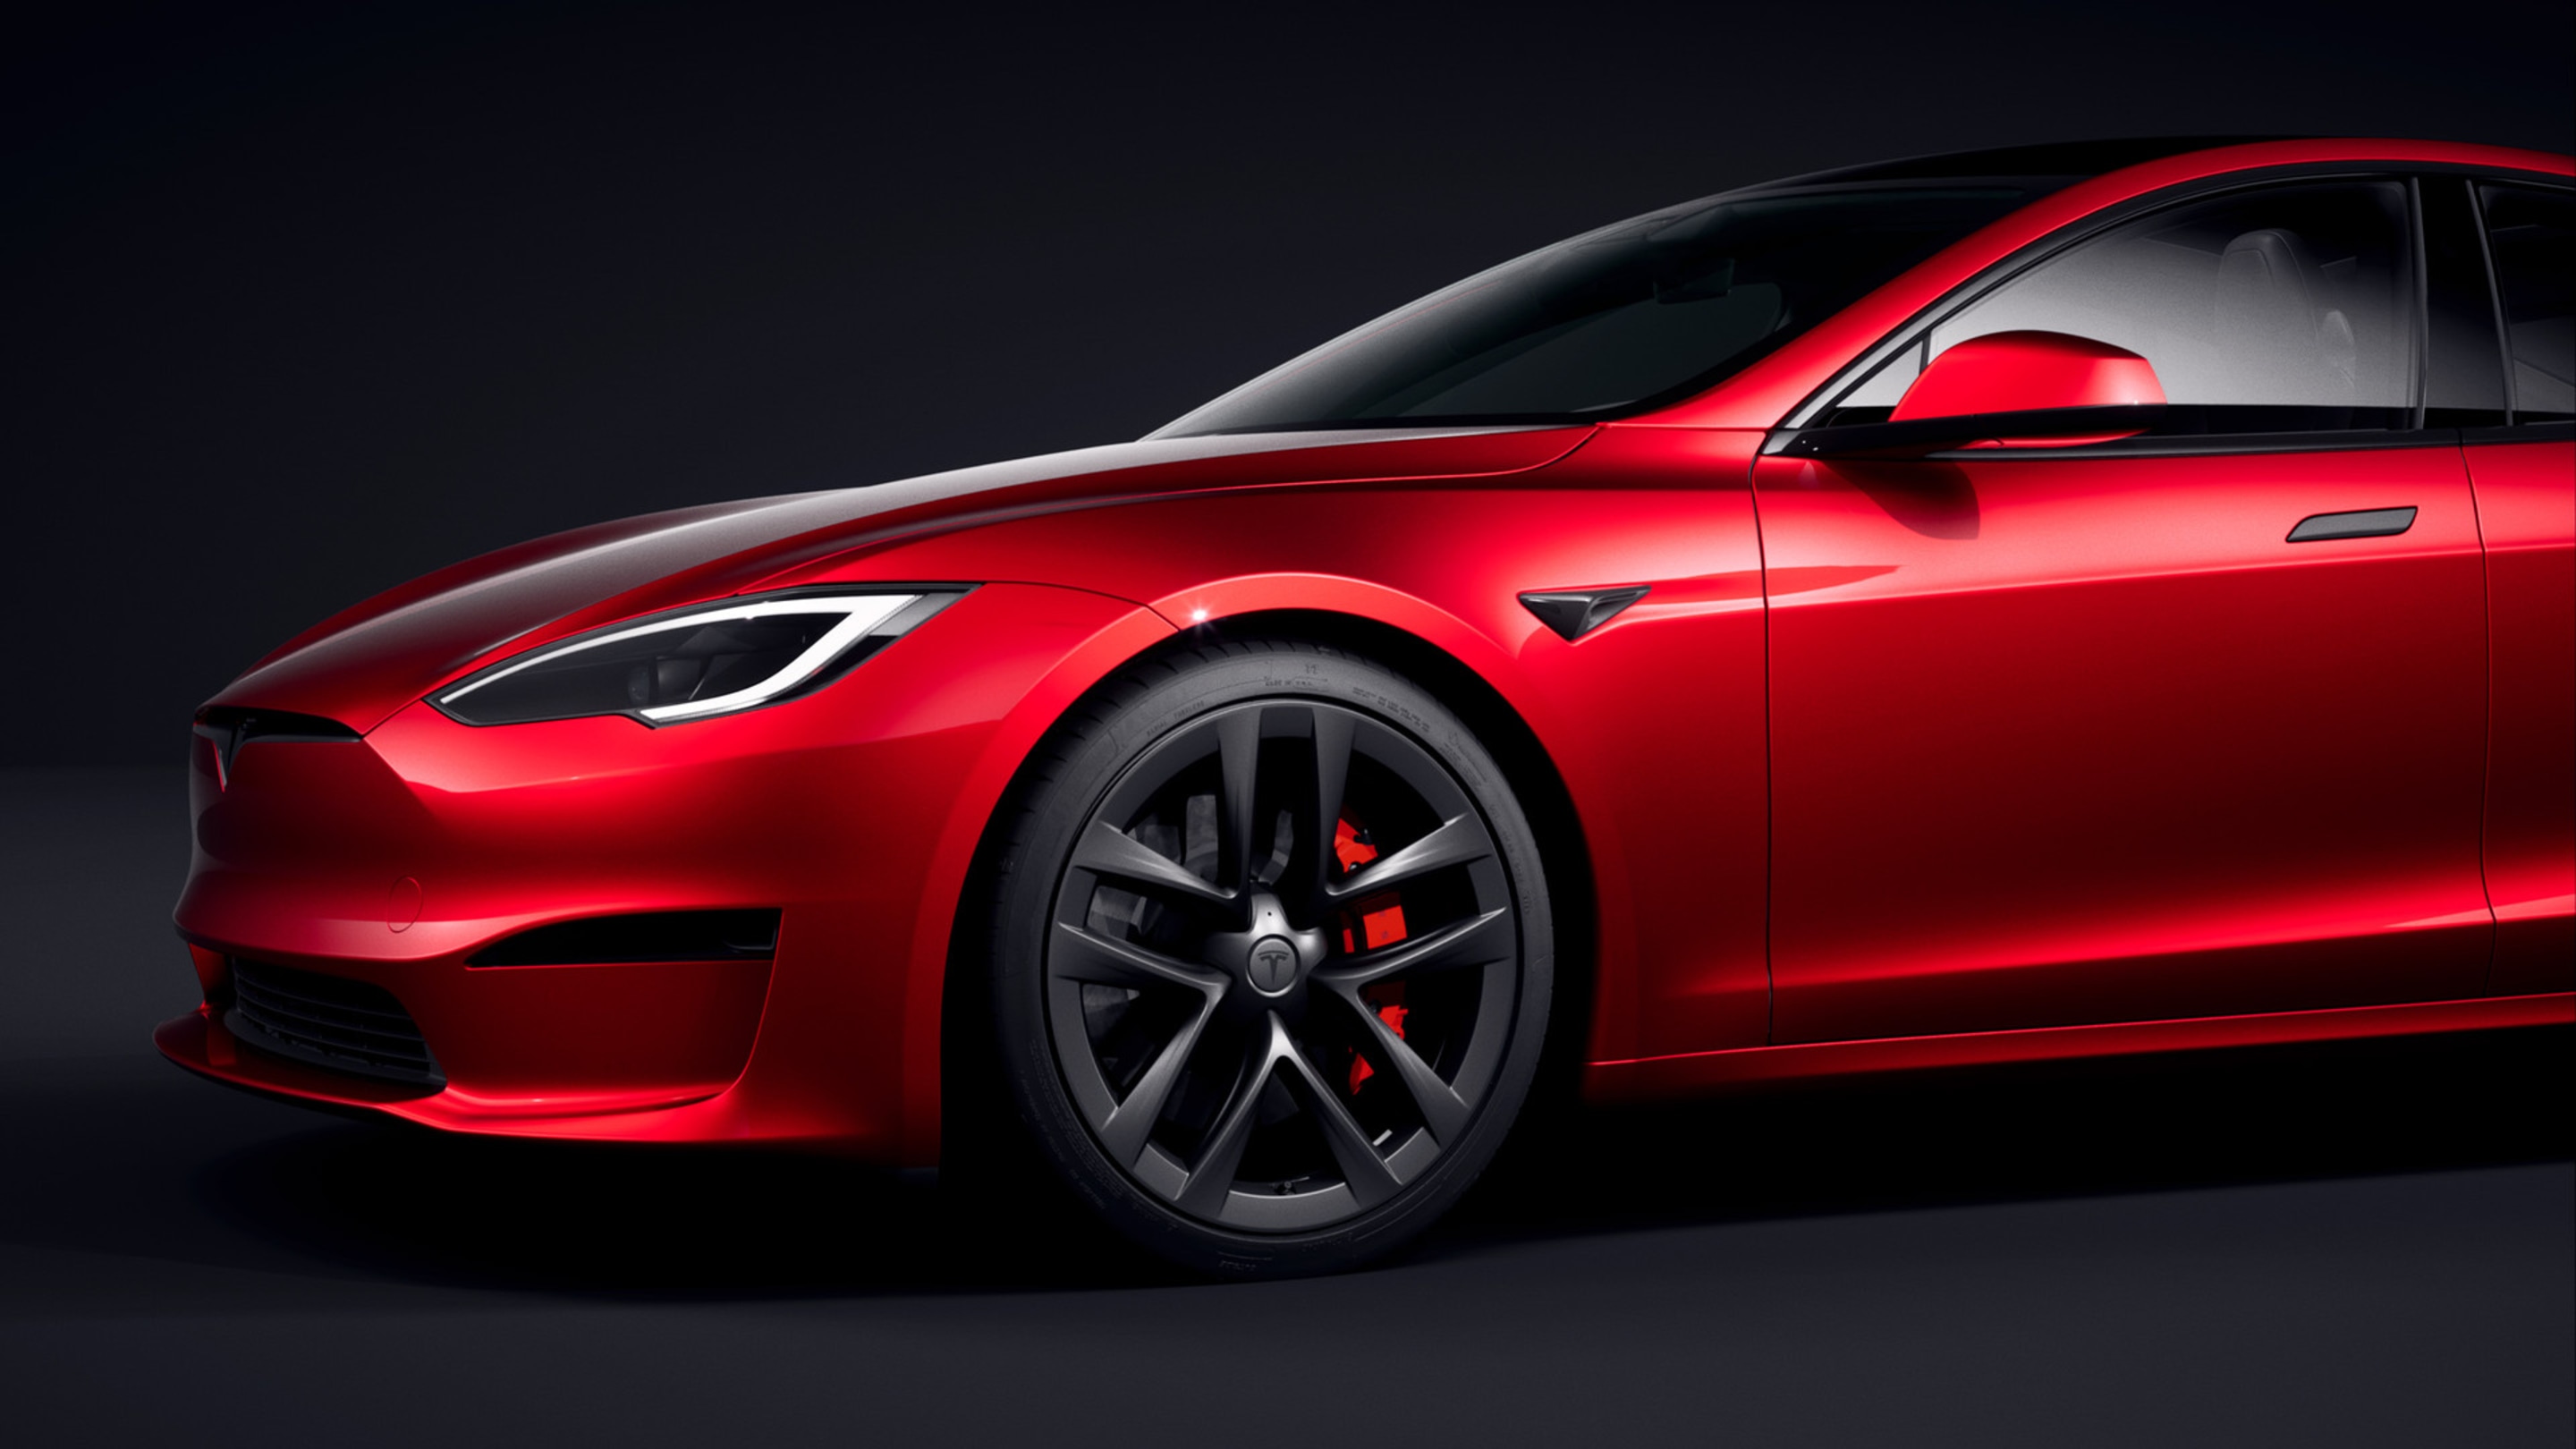 Vista frontal/lateral del Model S rojo